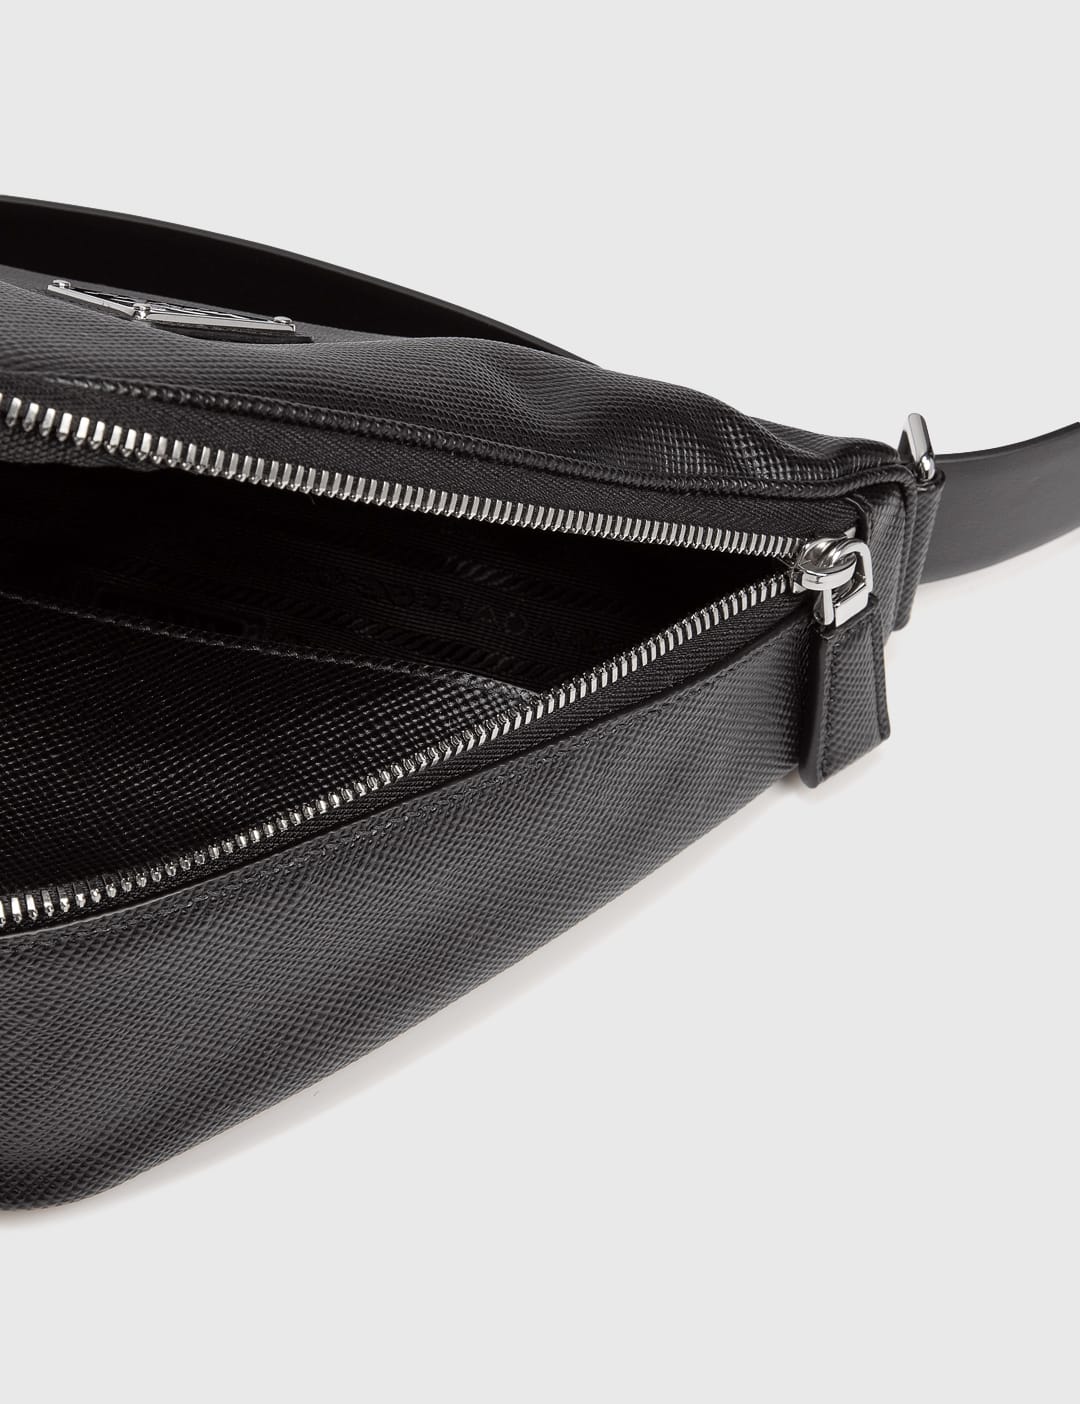 Prada - Prada Saffiano Leather Belt Bag | HBX - Globally Curated 